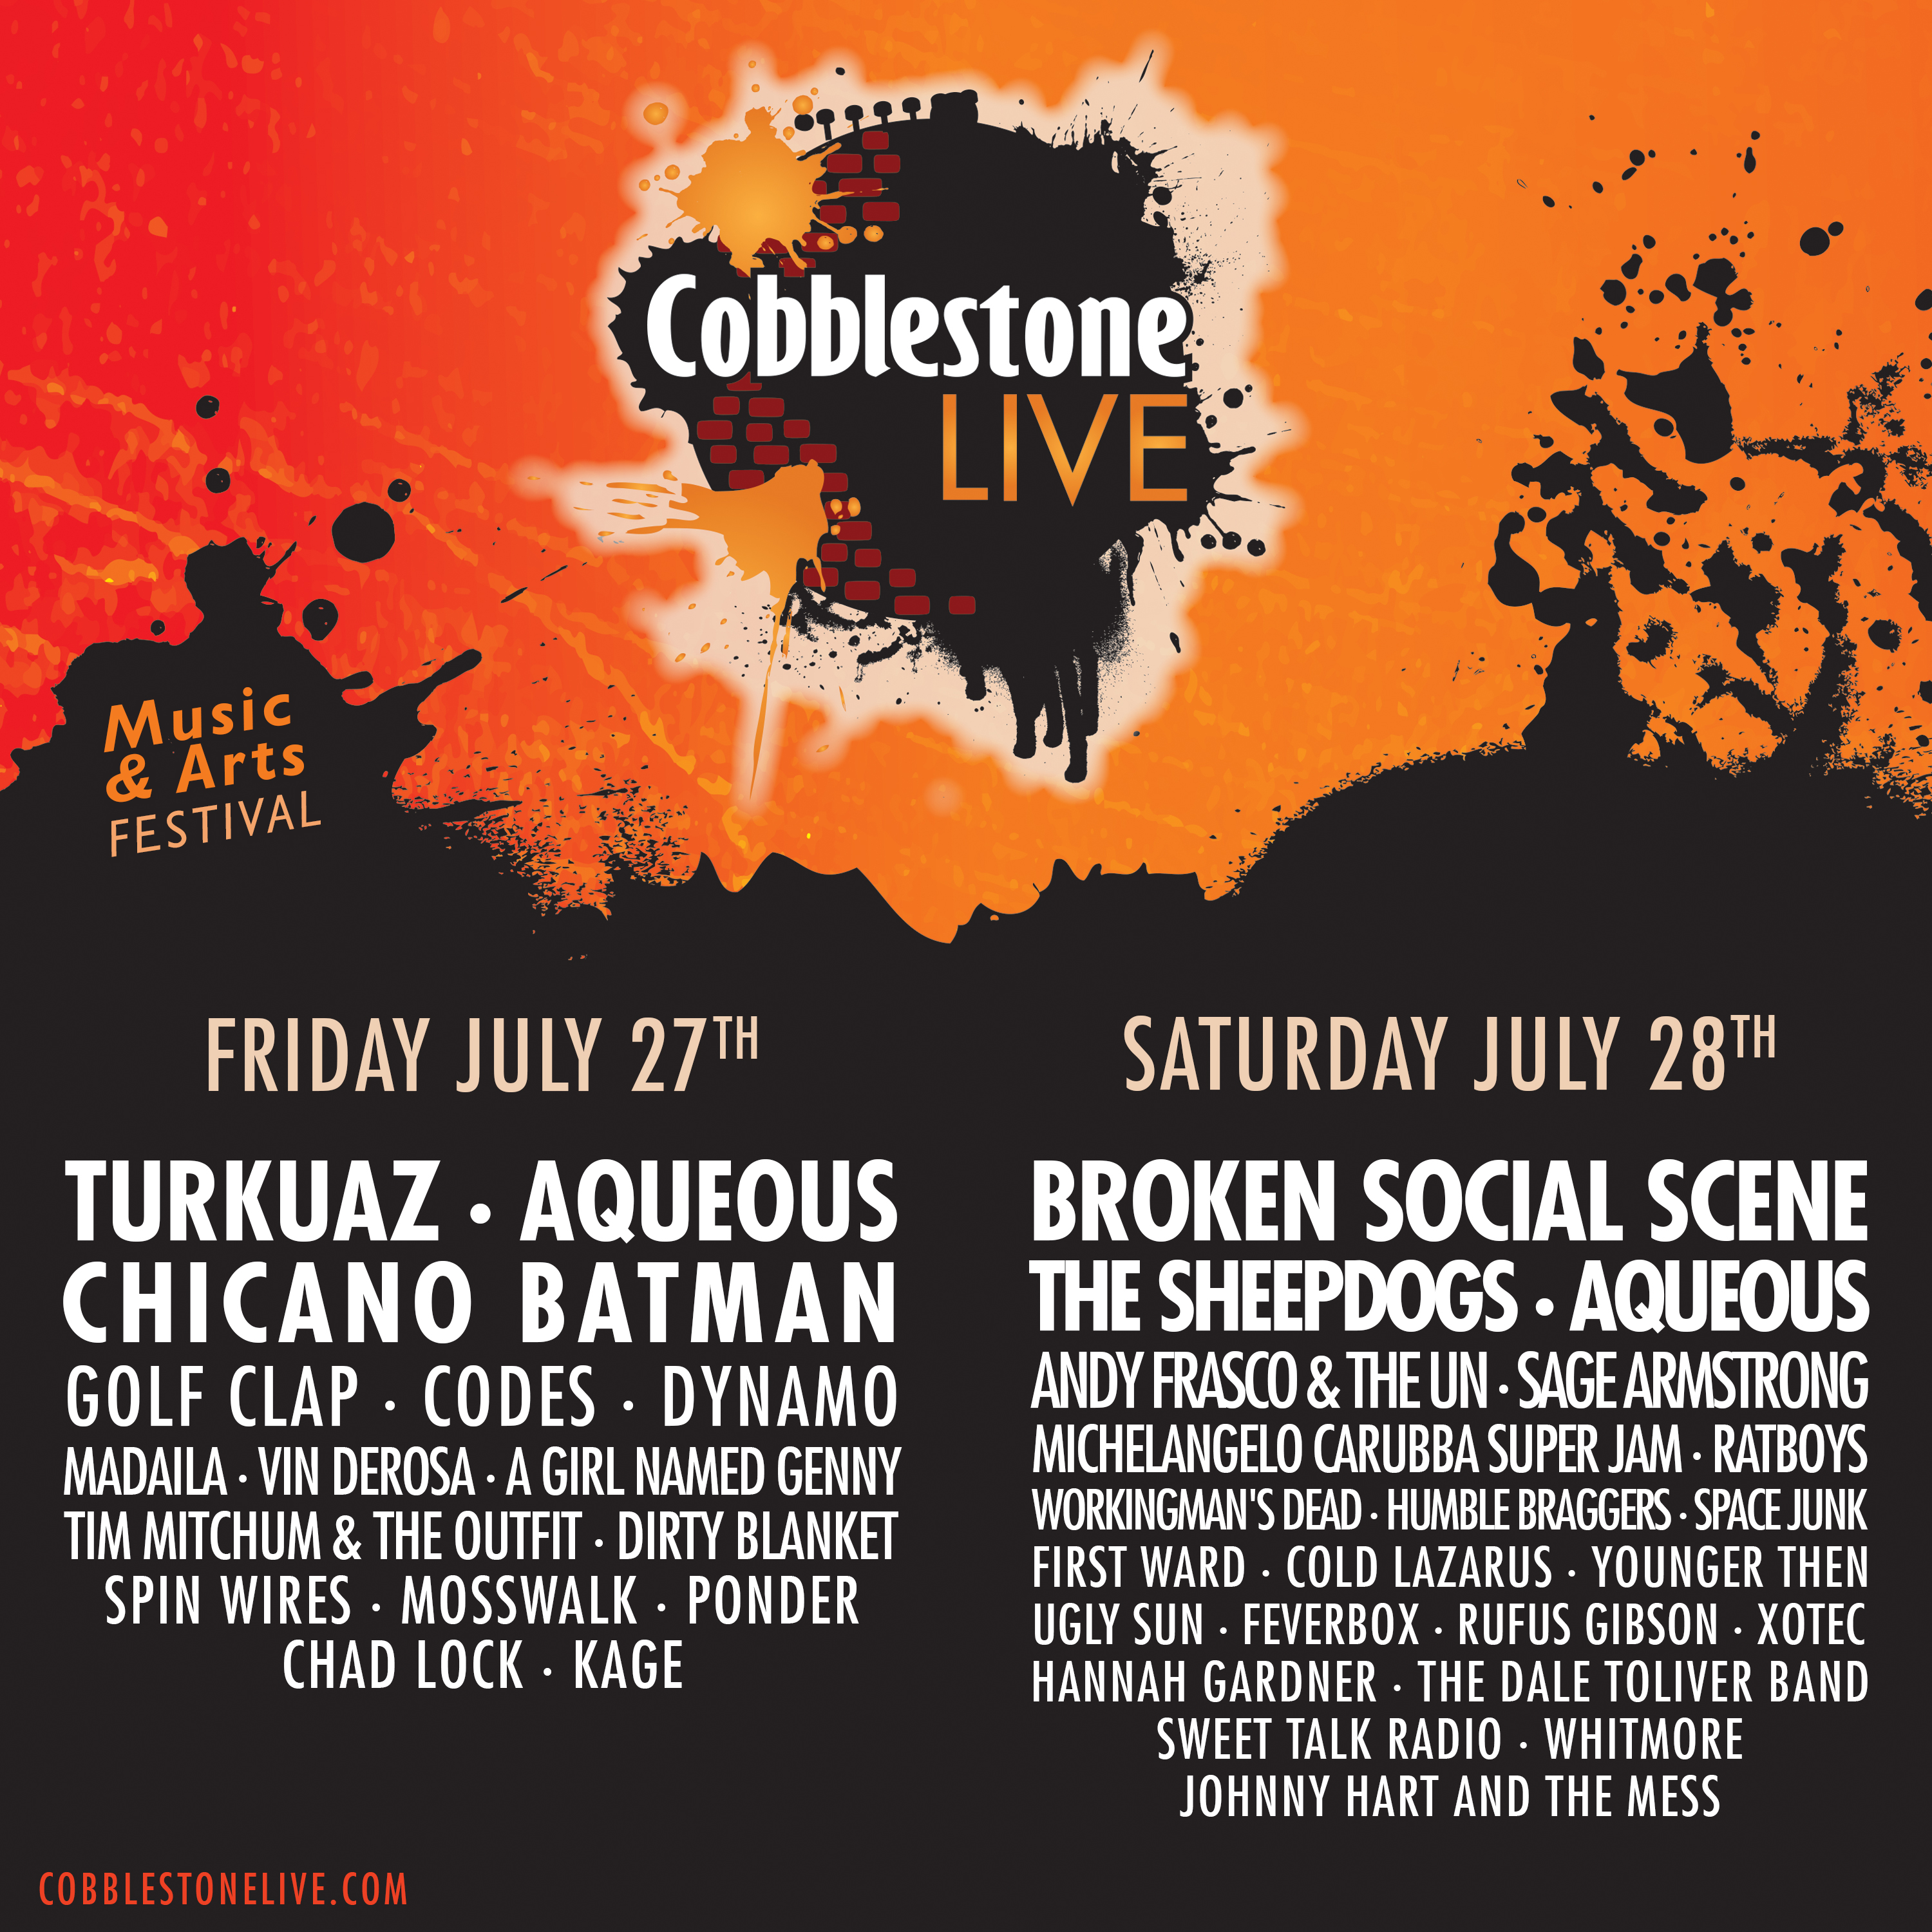 Cobblestone Live Music & Arts Festival redefines music festivals in